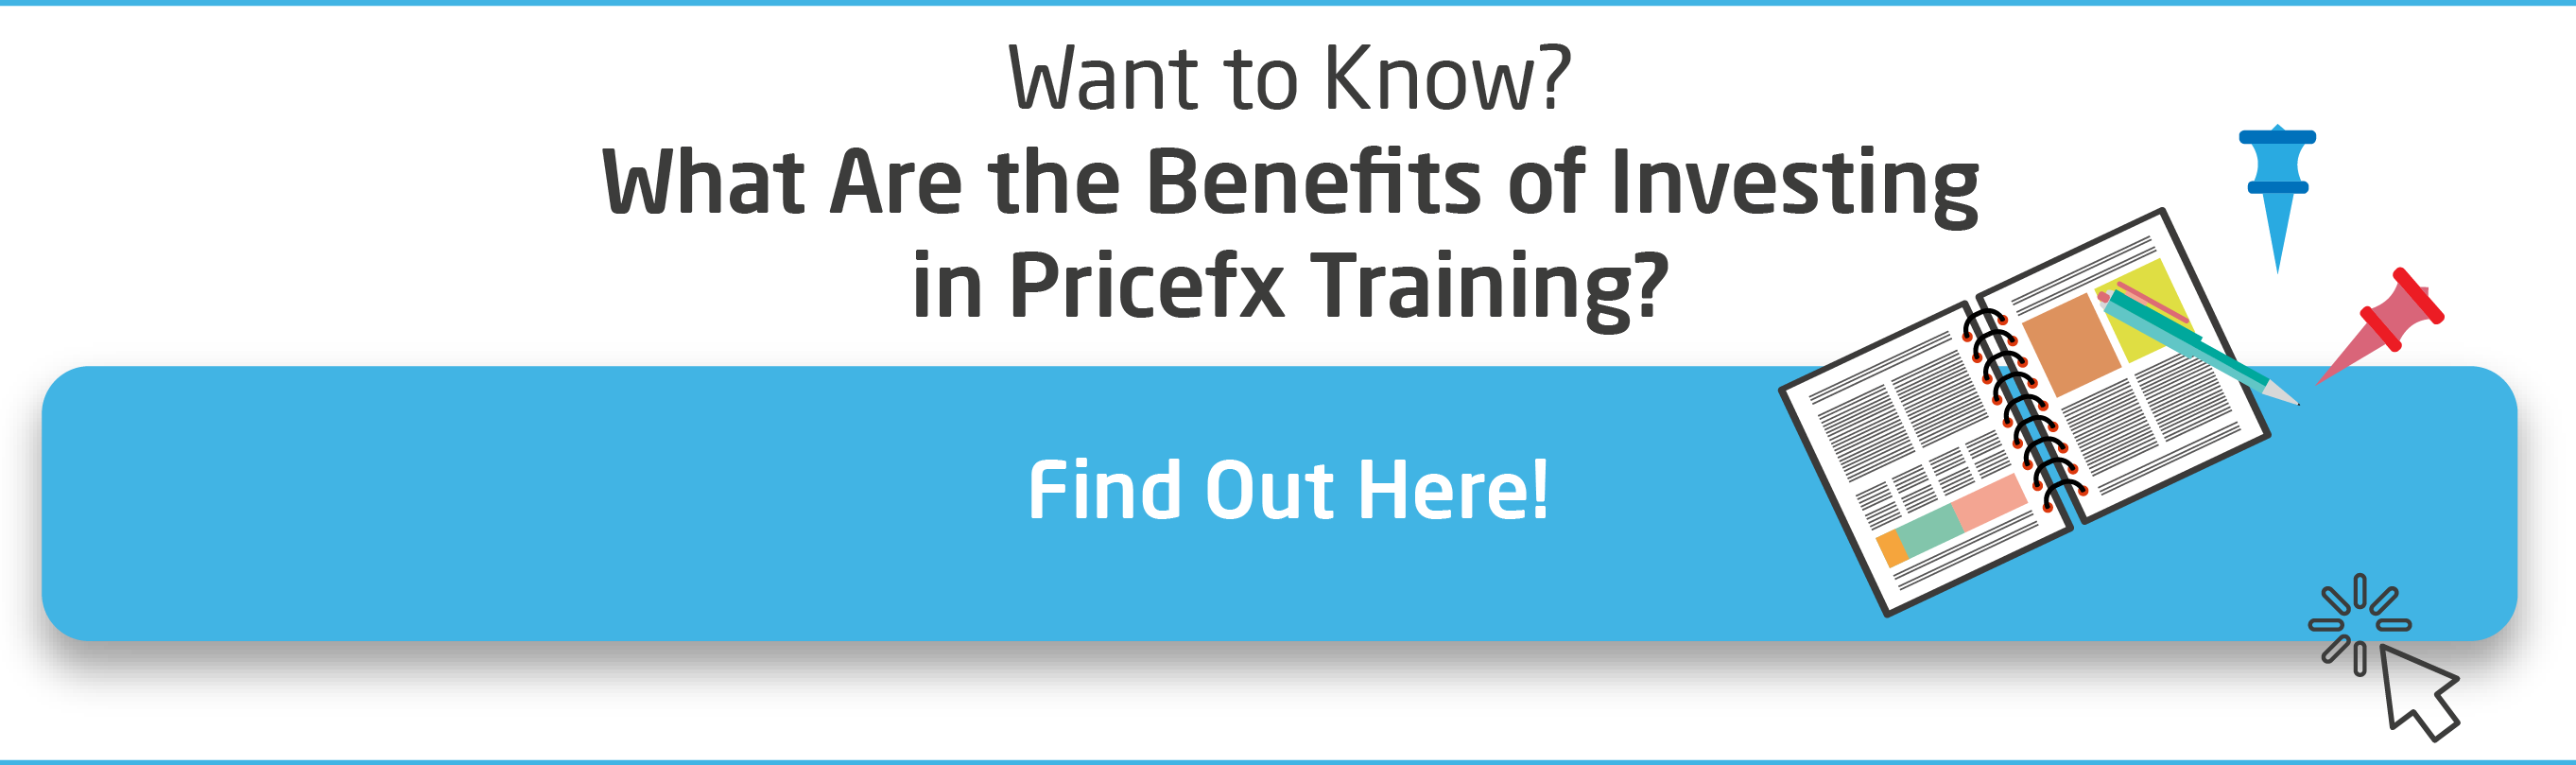 7-benefits-of-pricefx-training